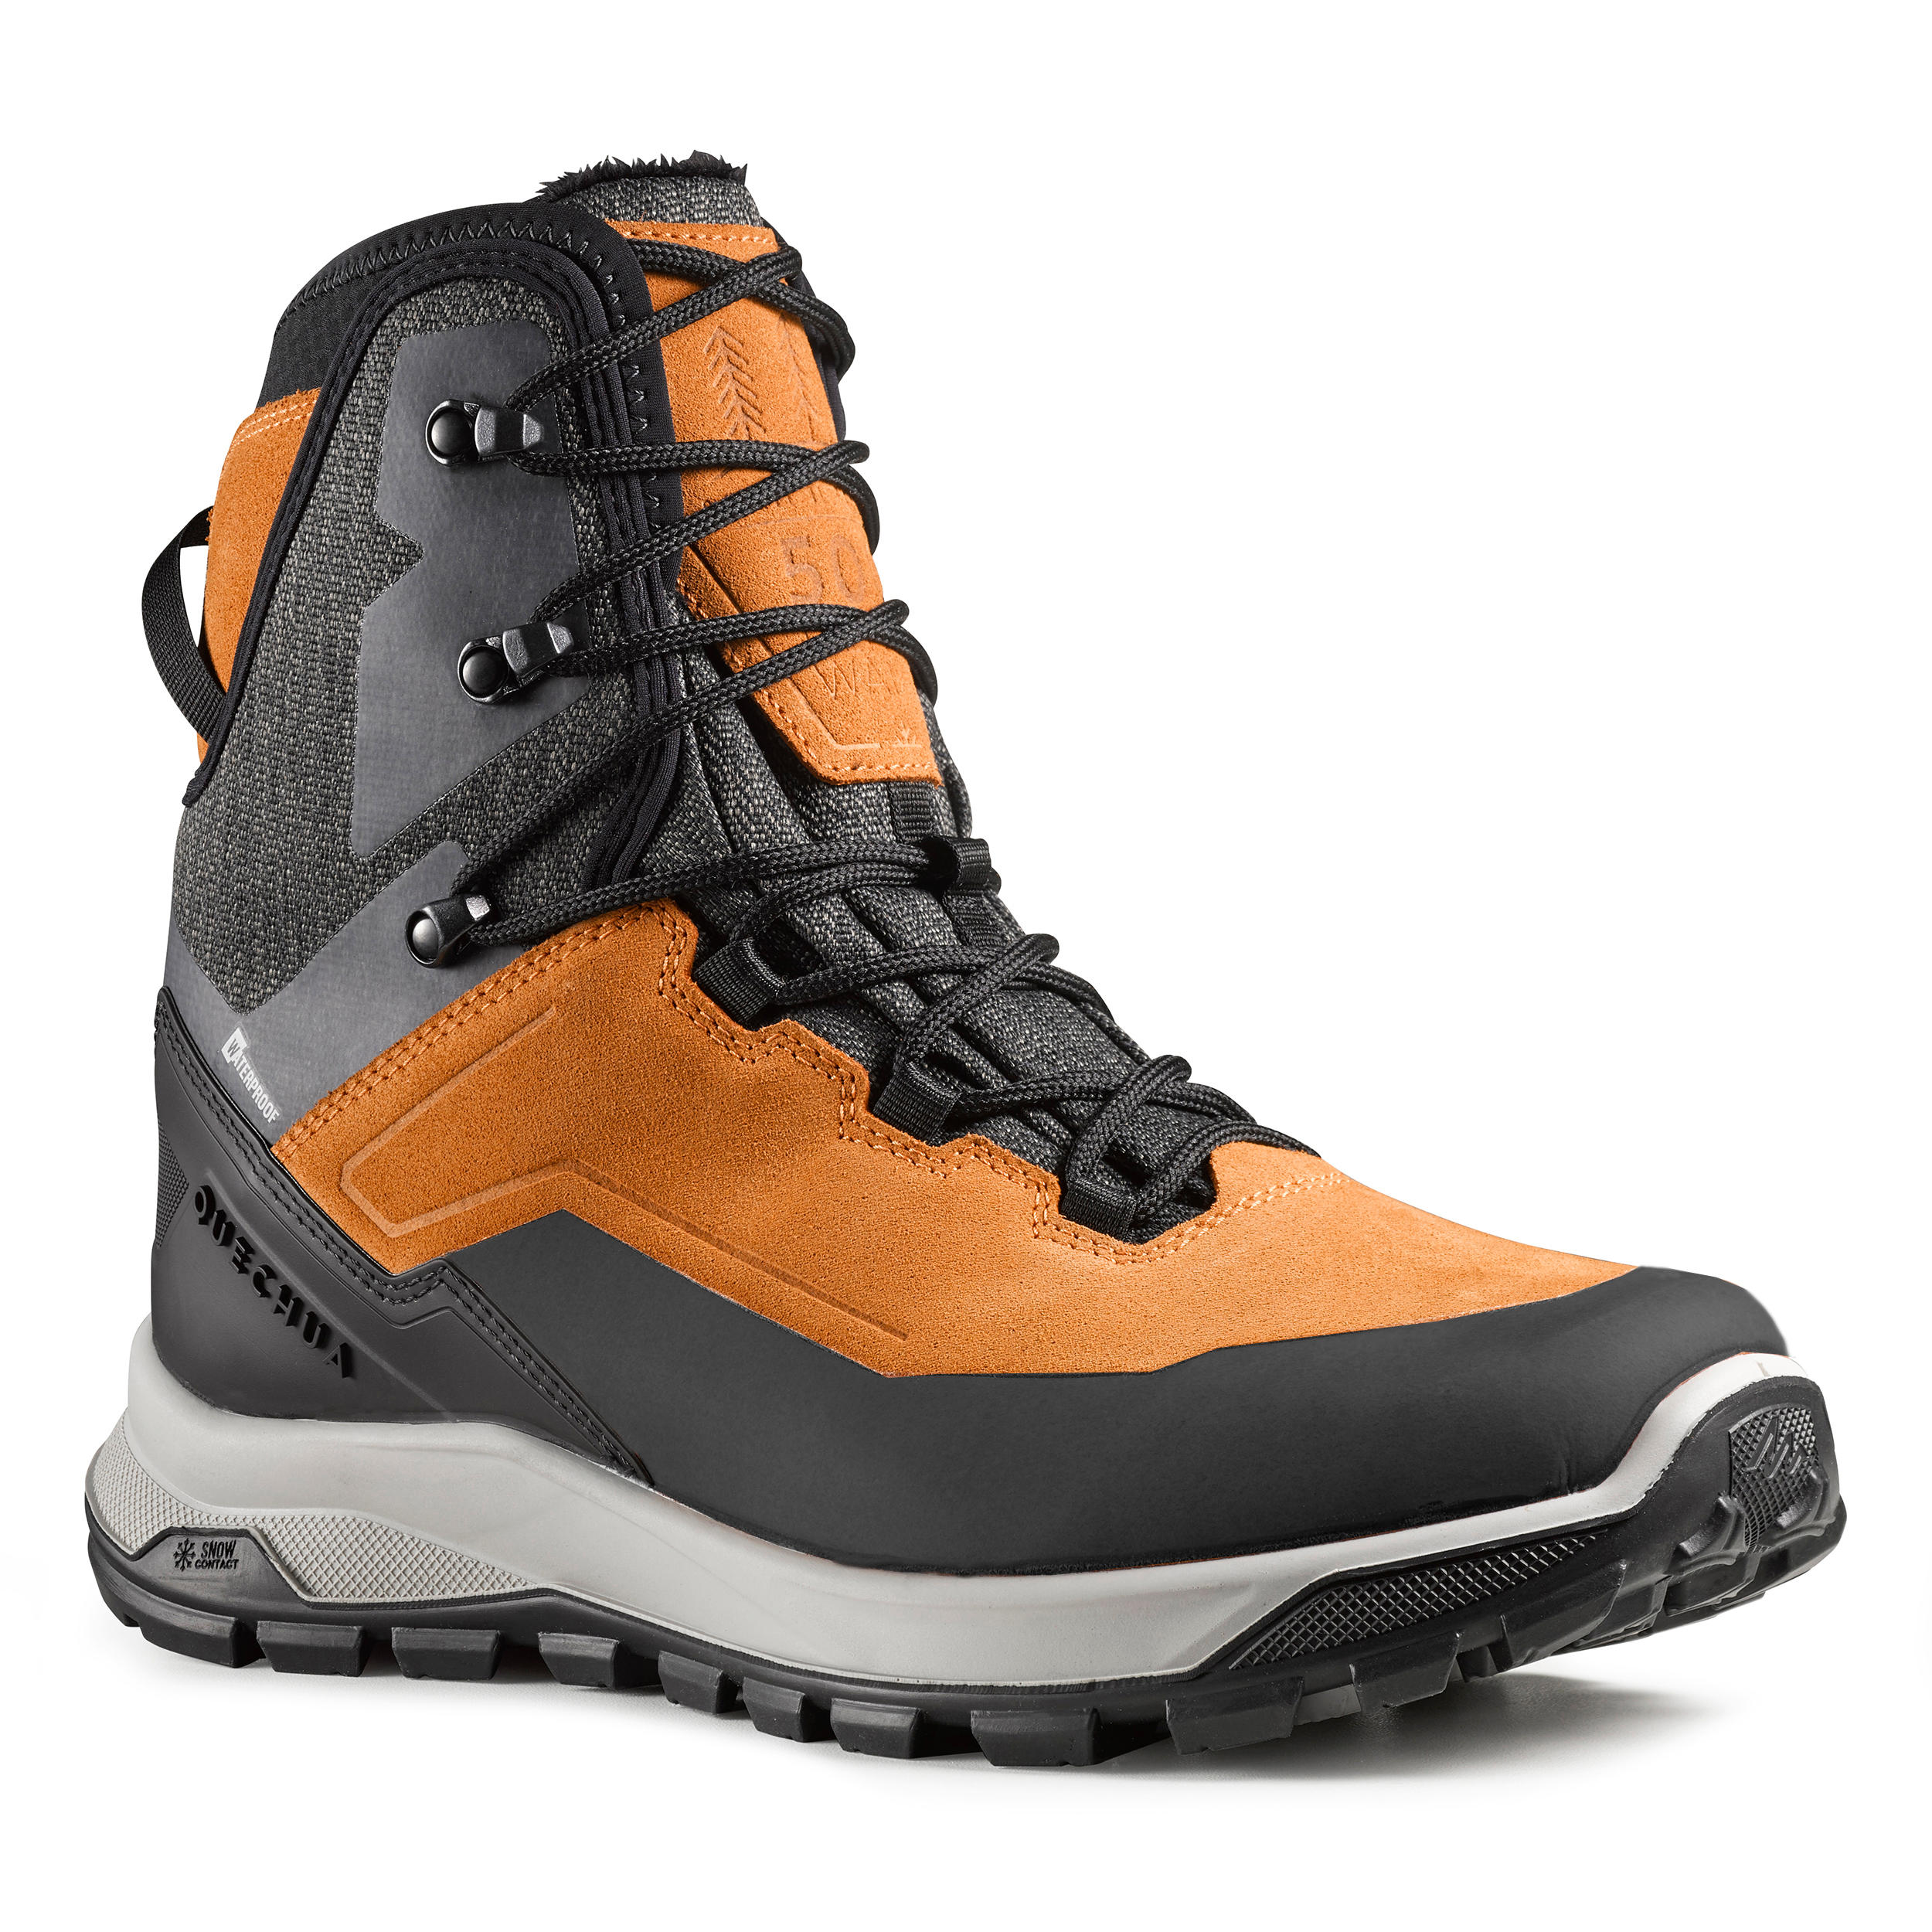 QUECHUA Men’s Warm and Waterproof Leather Hiking Boots - SH500 U-WARM